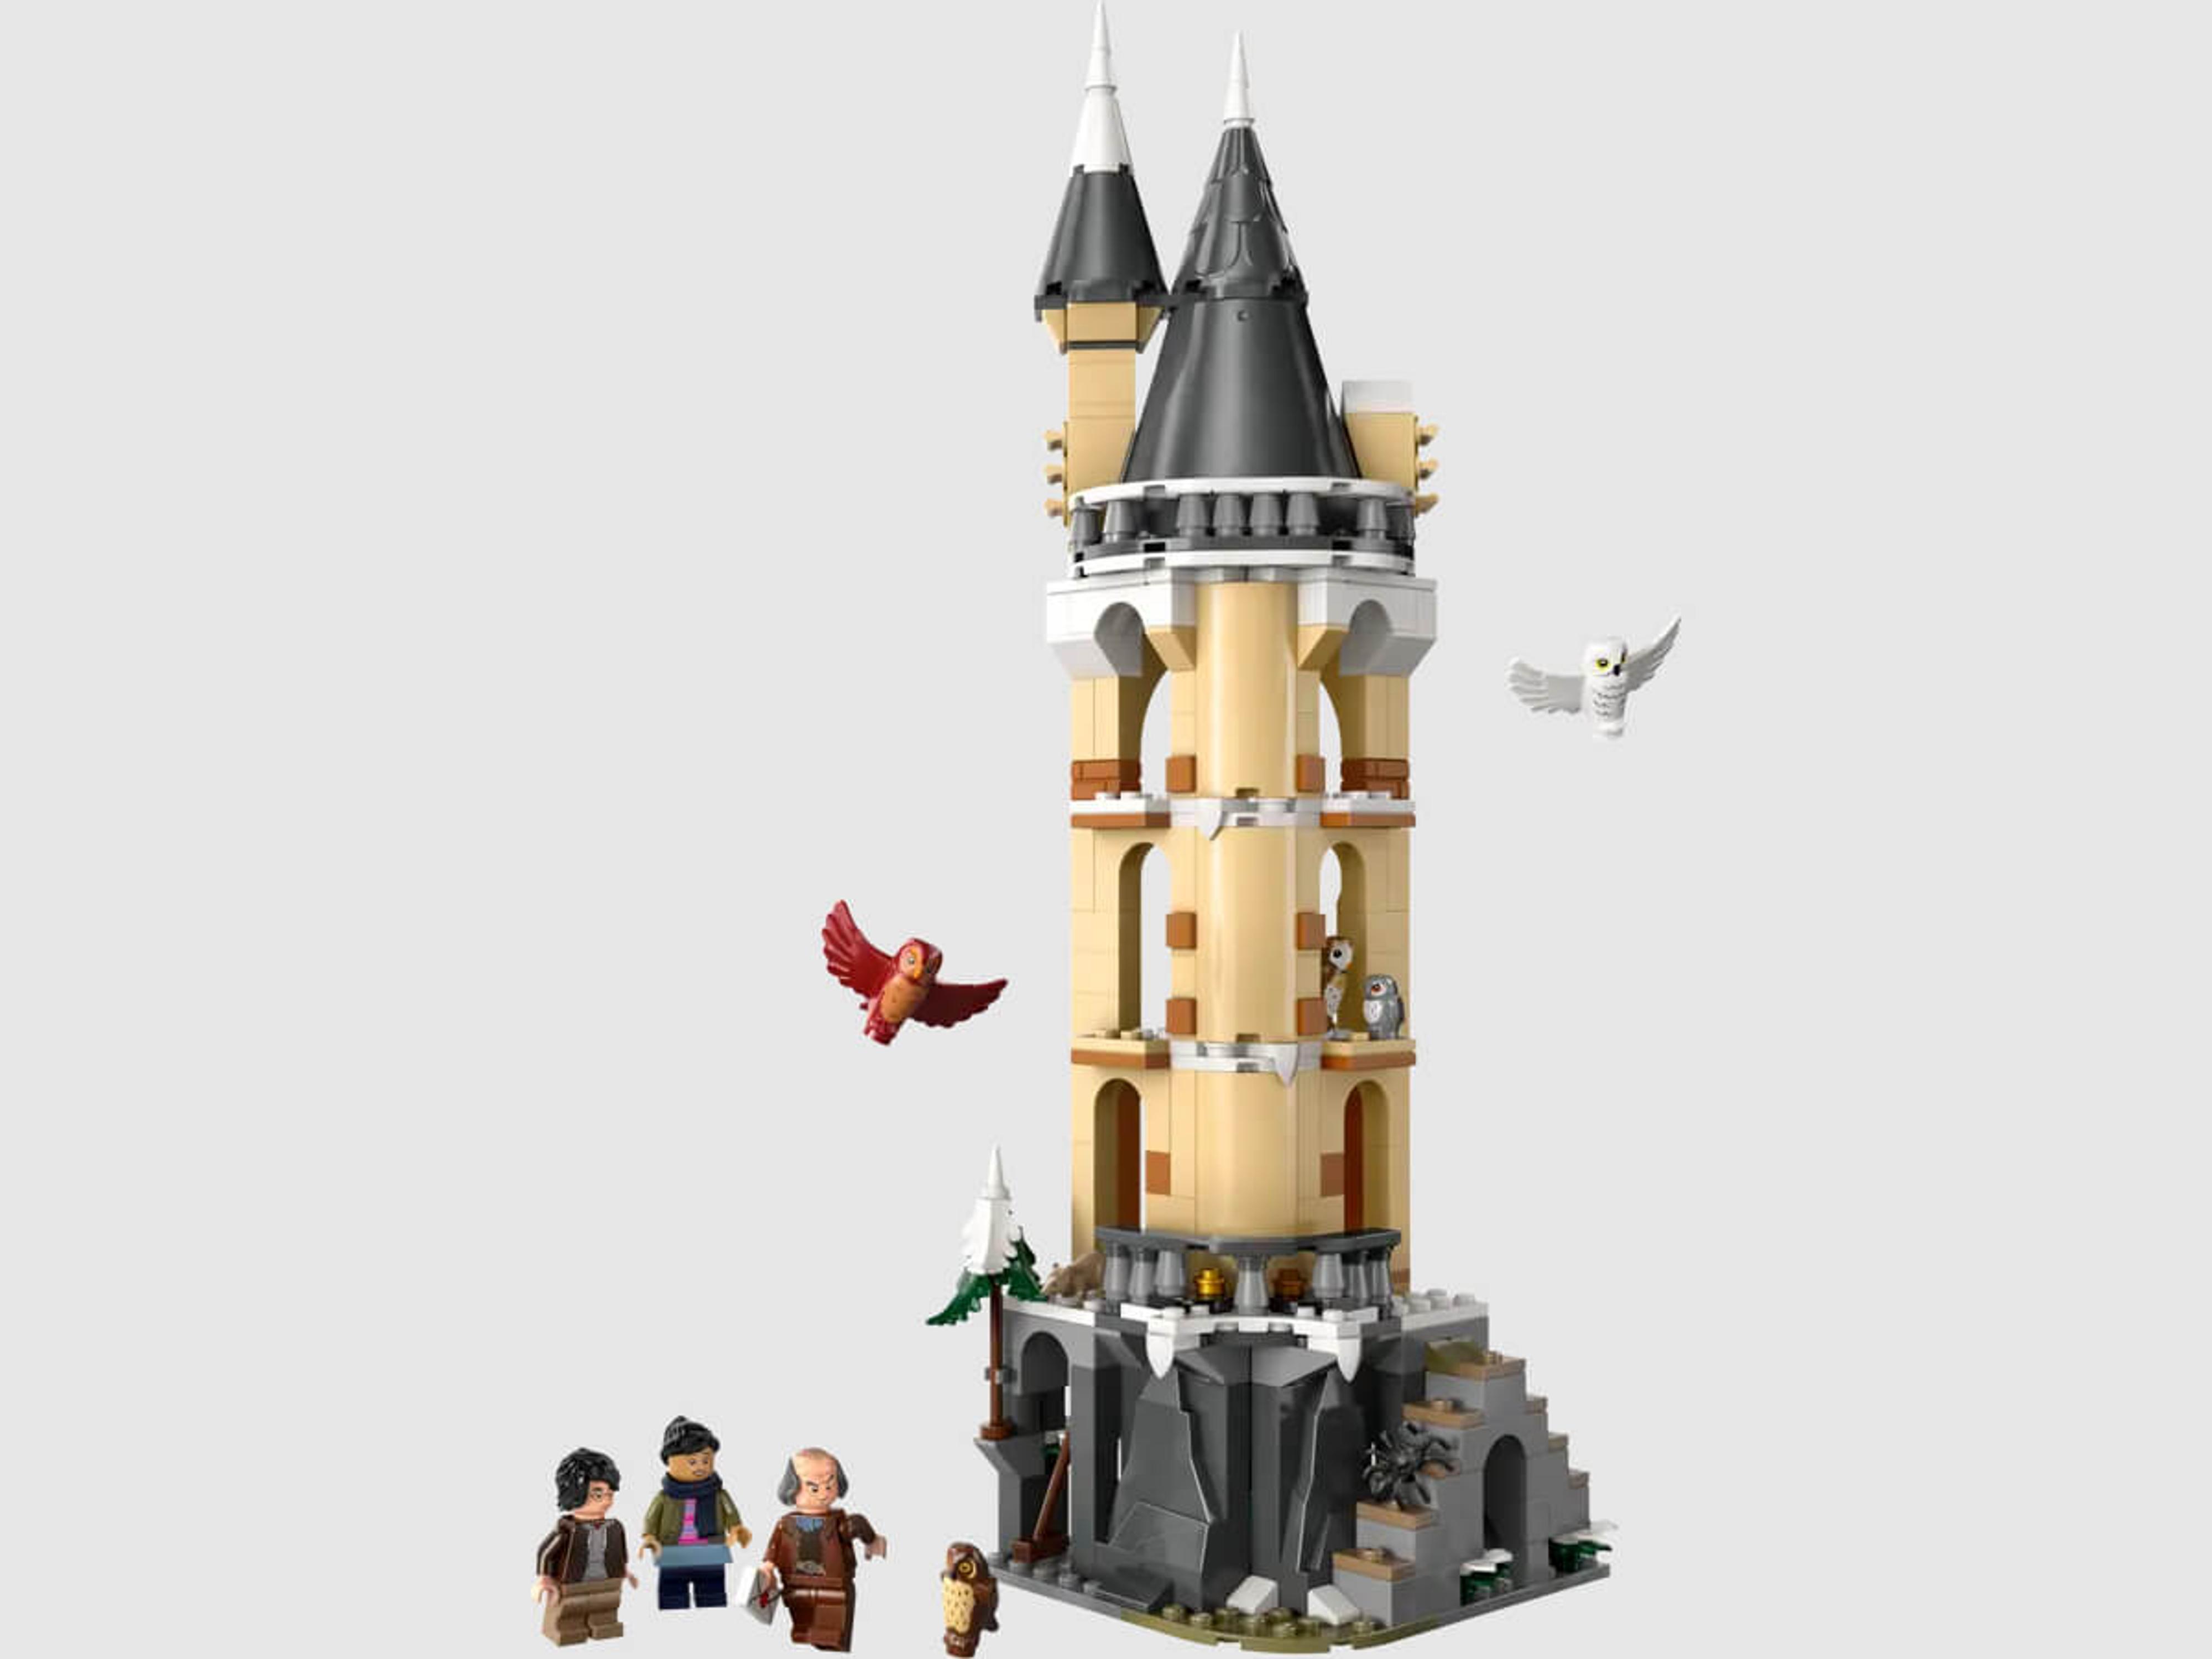 LEGO Harry Potter - Hogwarts Castle Owlery